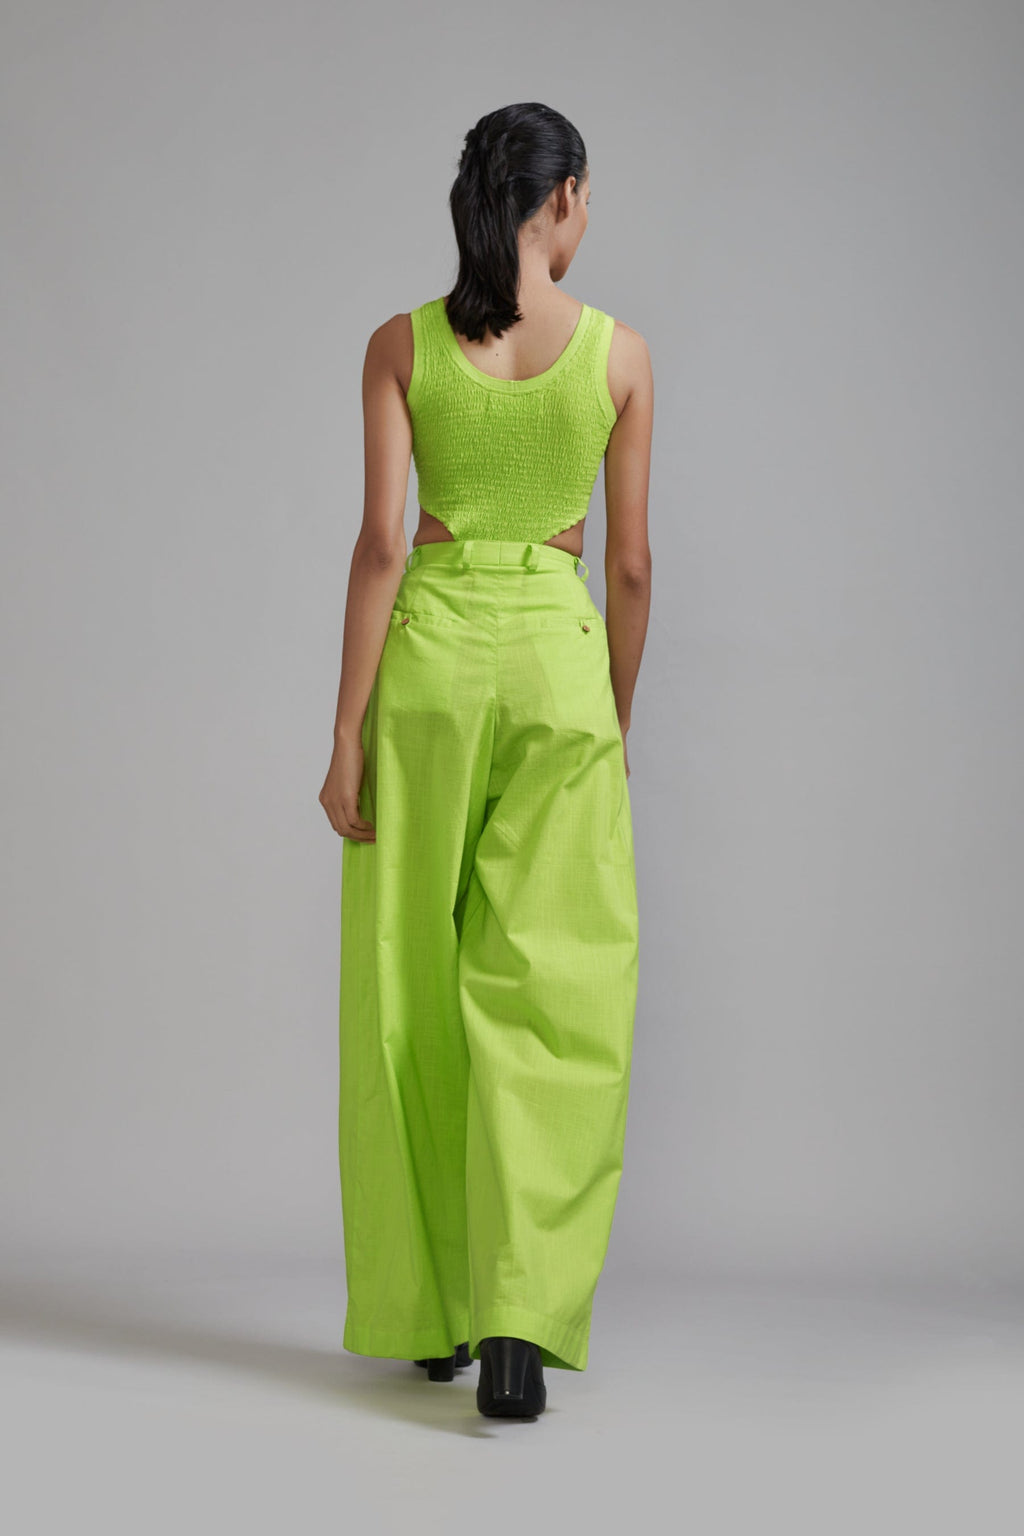 Mati SET Neon Green Bodysuit Set (2 PCS)